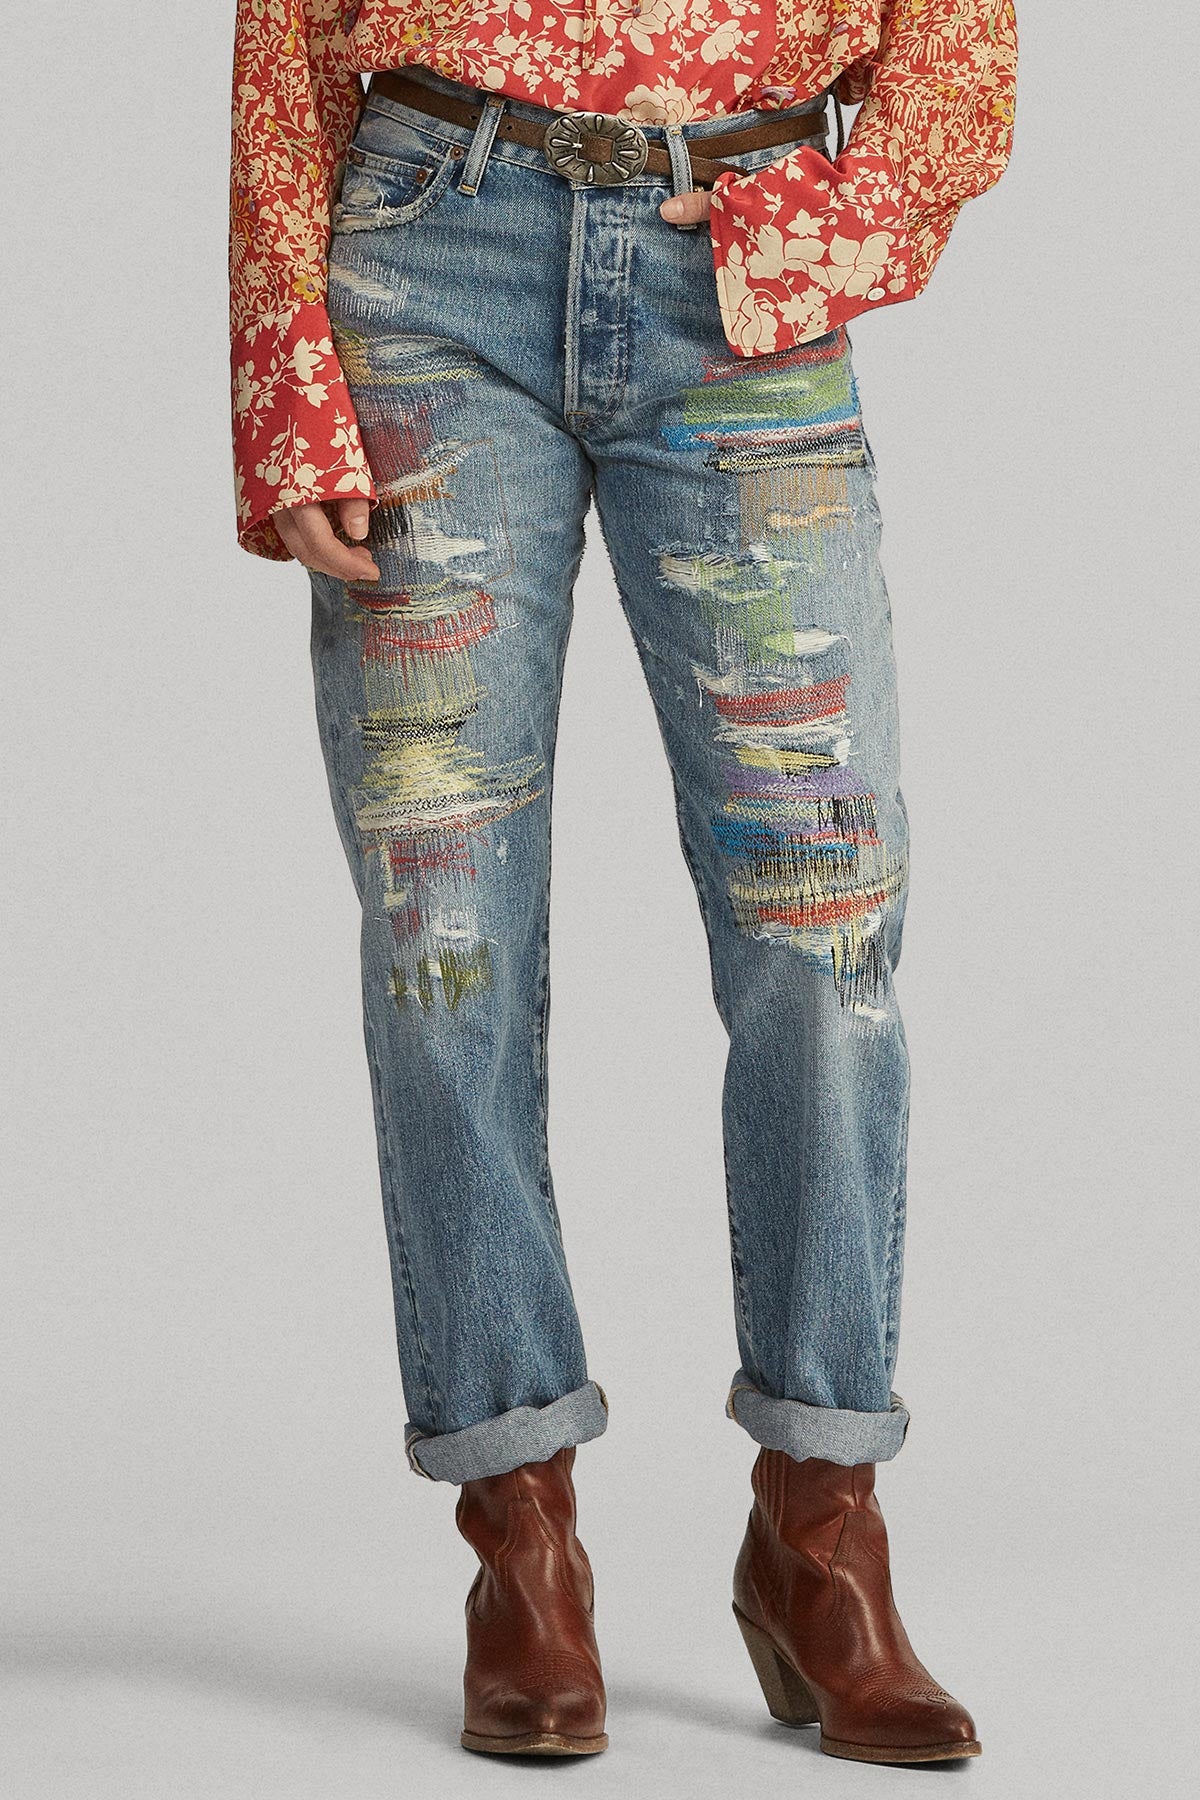 Polo Ralph Lauren Jeans-Libas Trendy Fashion Store